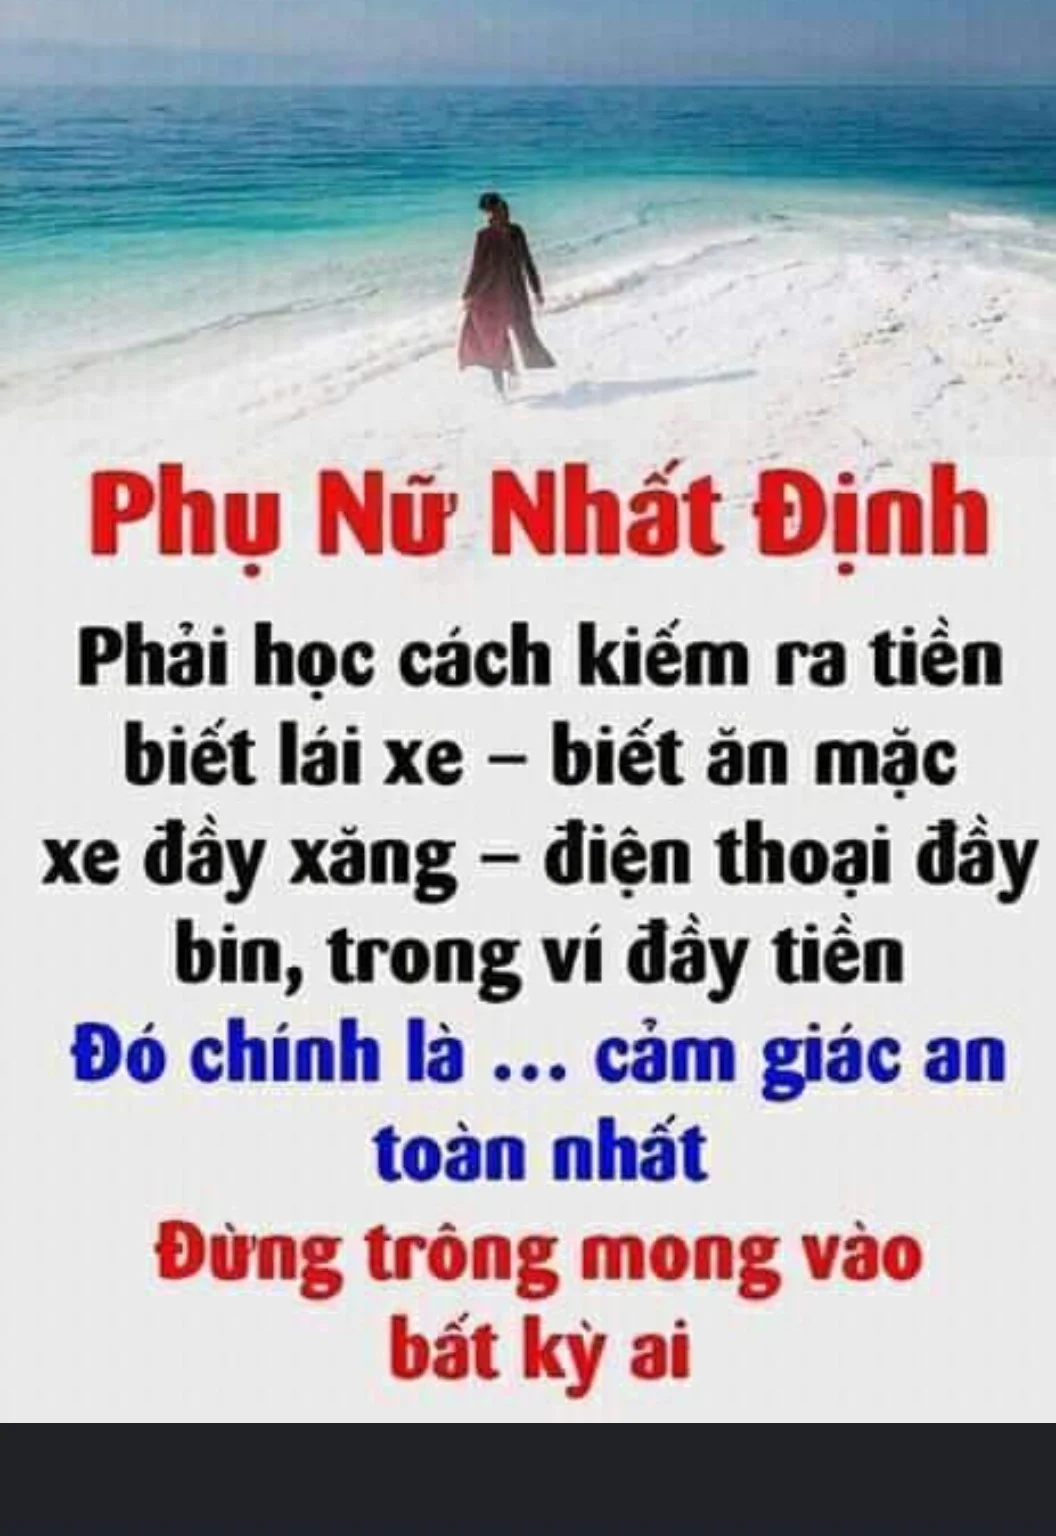 Thu Kieu Huynh Thi's cover photo